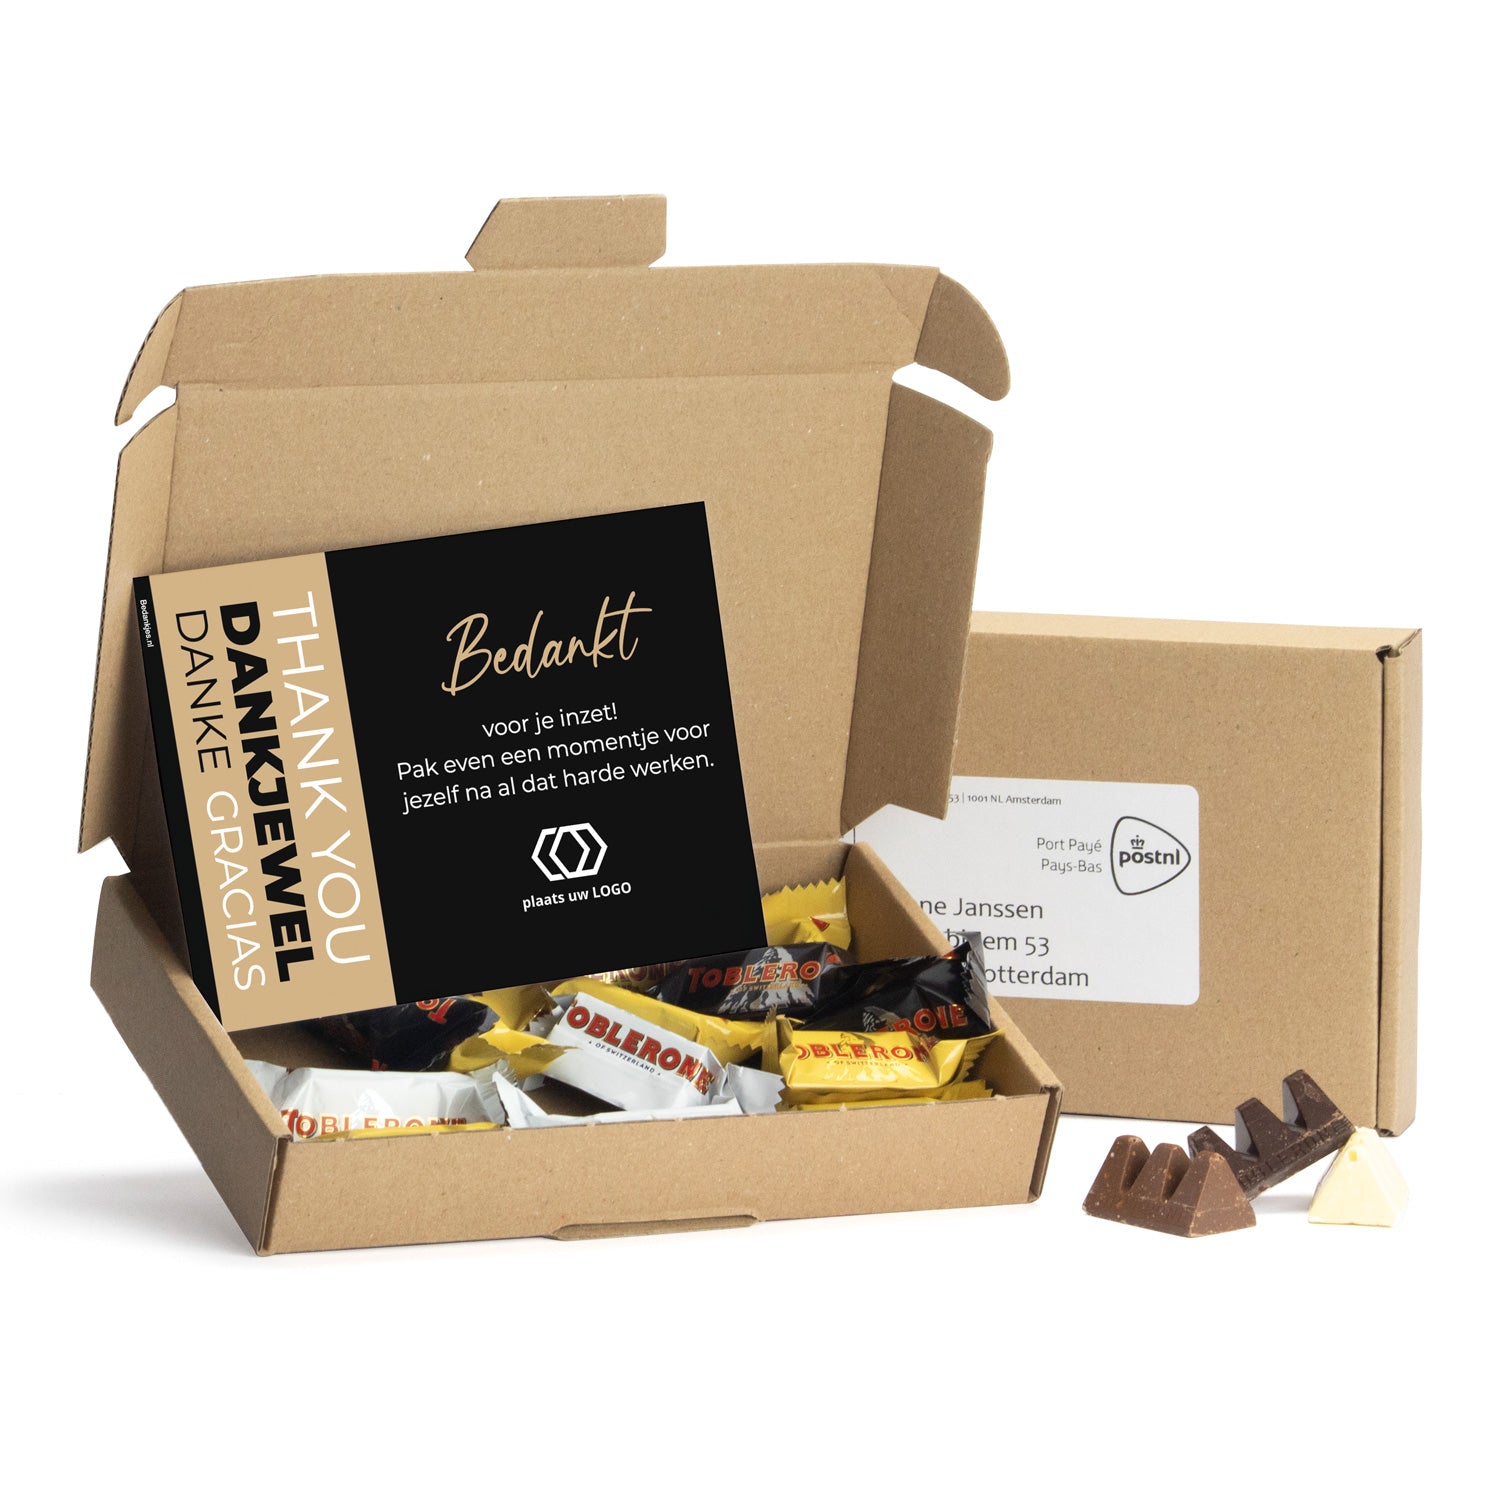 Pakket met Toblerone chocolade - Brievenbus - Bedankjes.nl